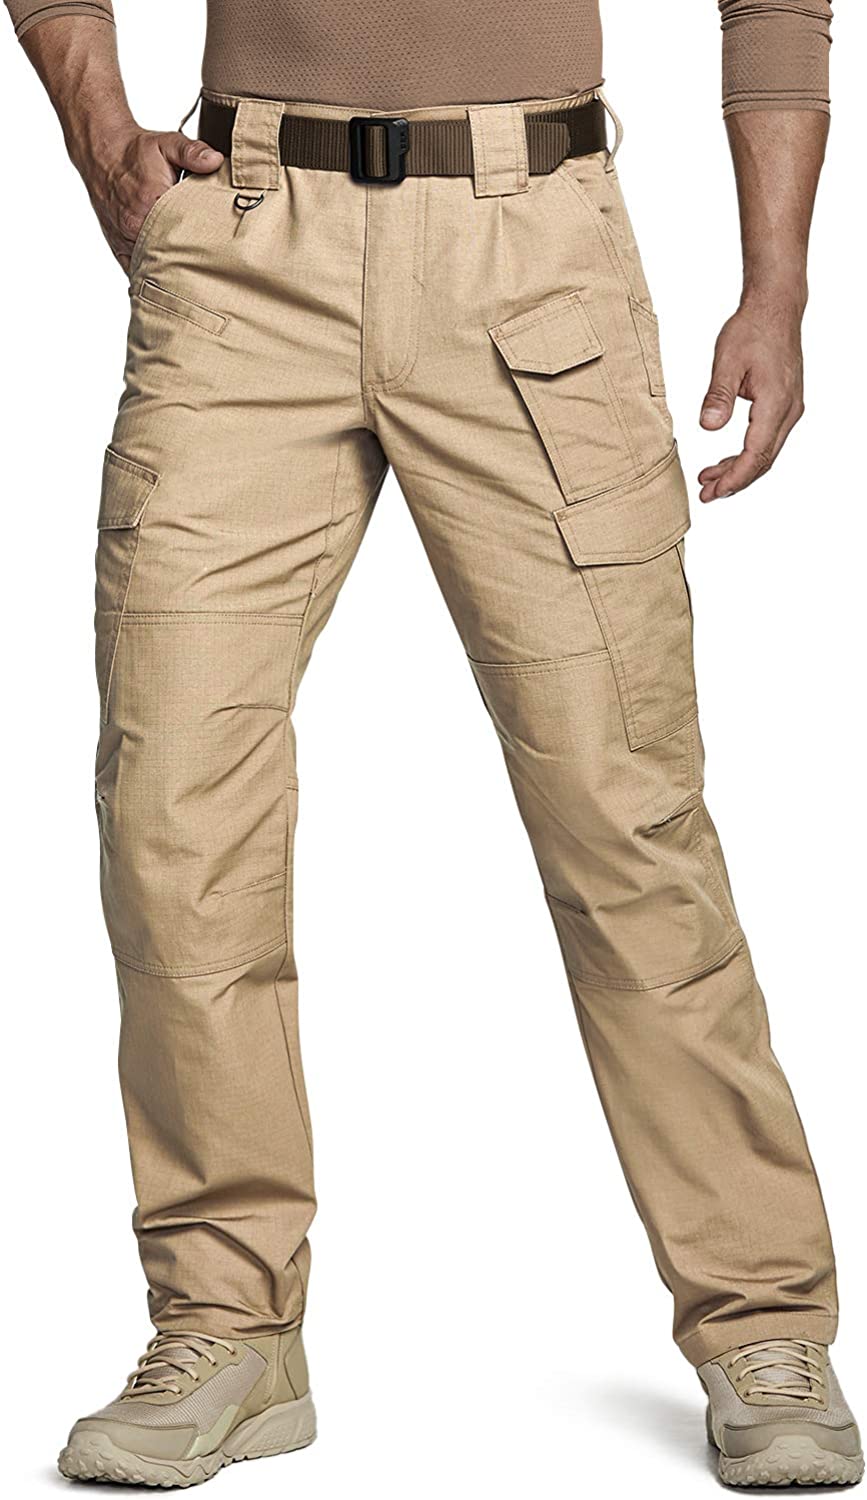 Outdoor Apparel Lightweight EDC Hiking Work Pants Water Repellent Ripstop Cargo Pants CQR Mens Tactical Pants 